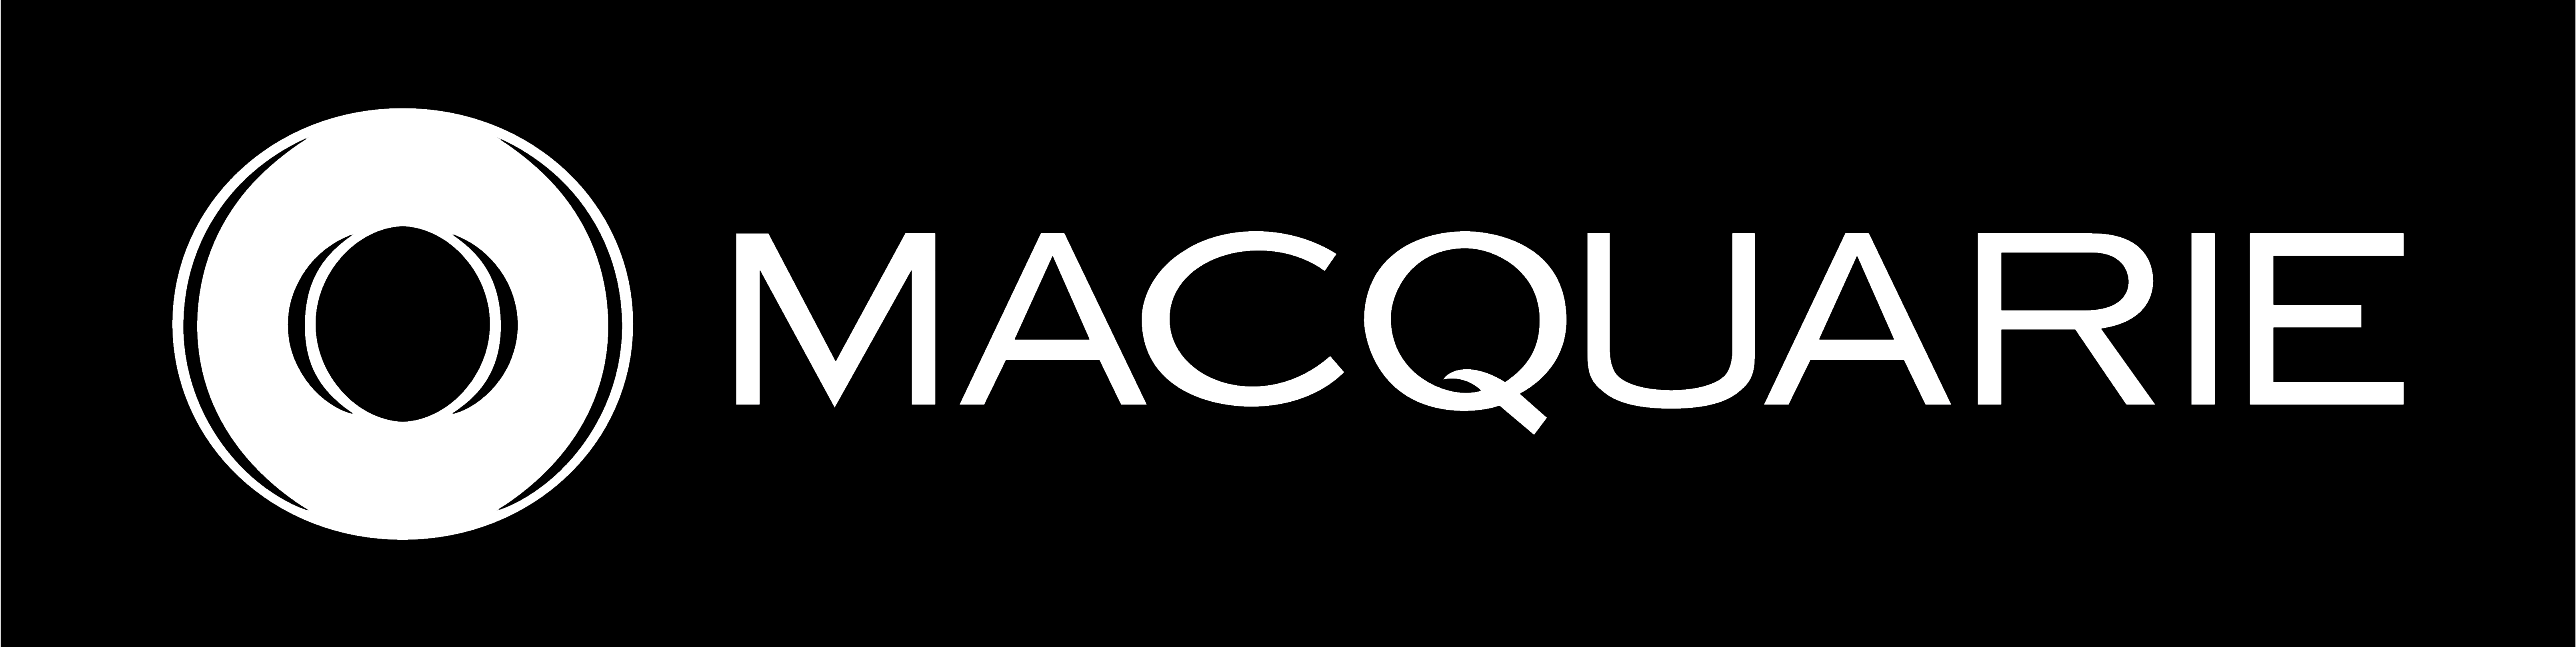 Macquarie Brand Logo